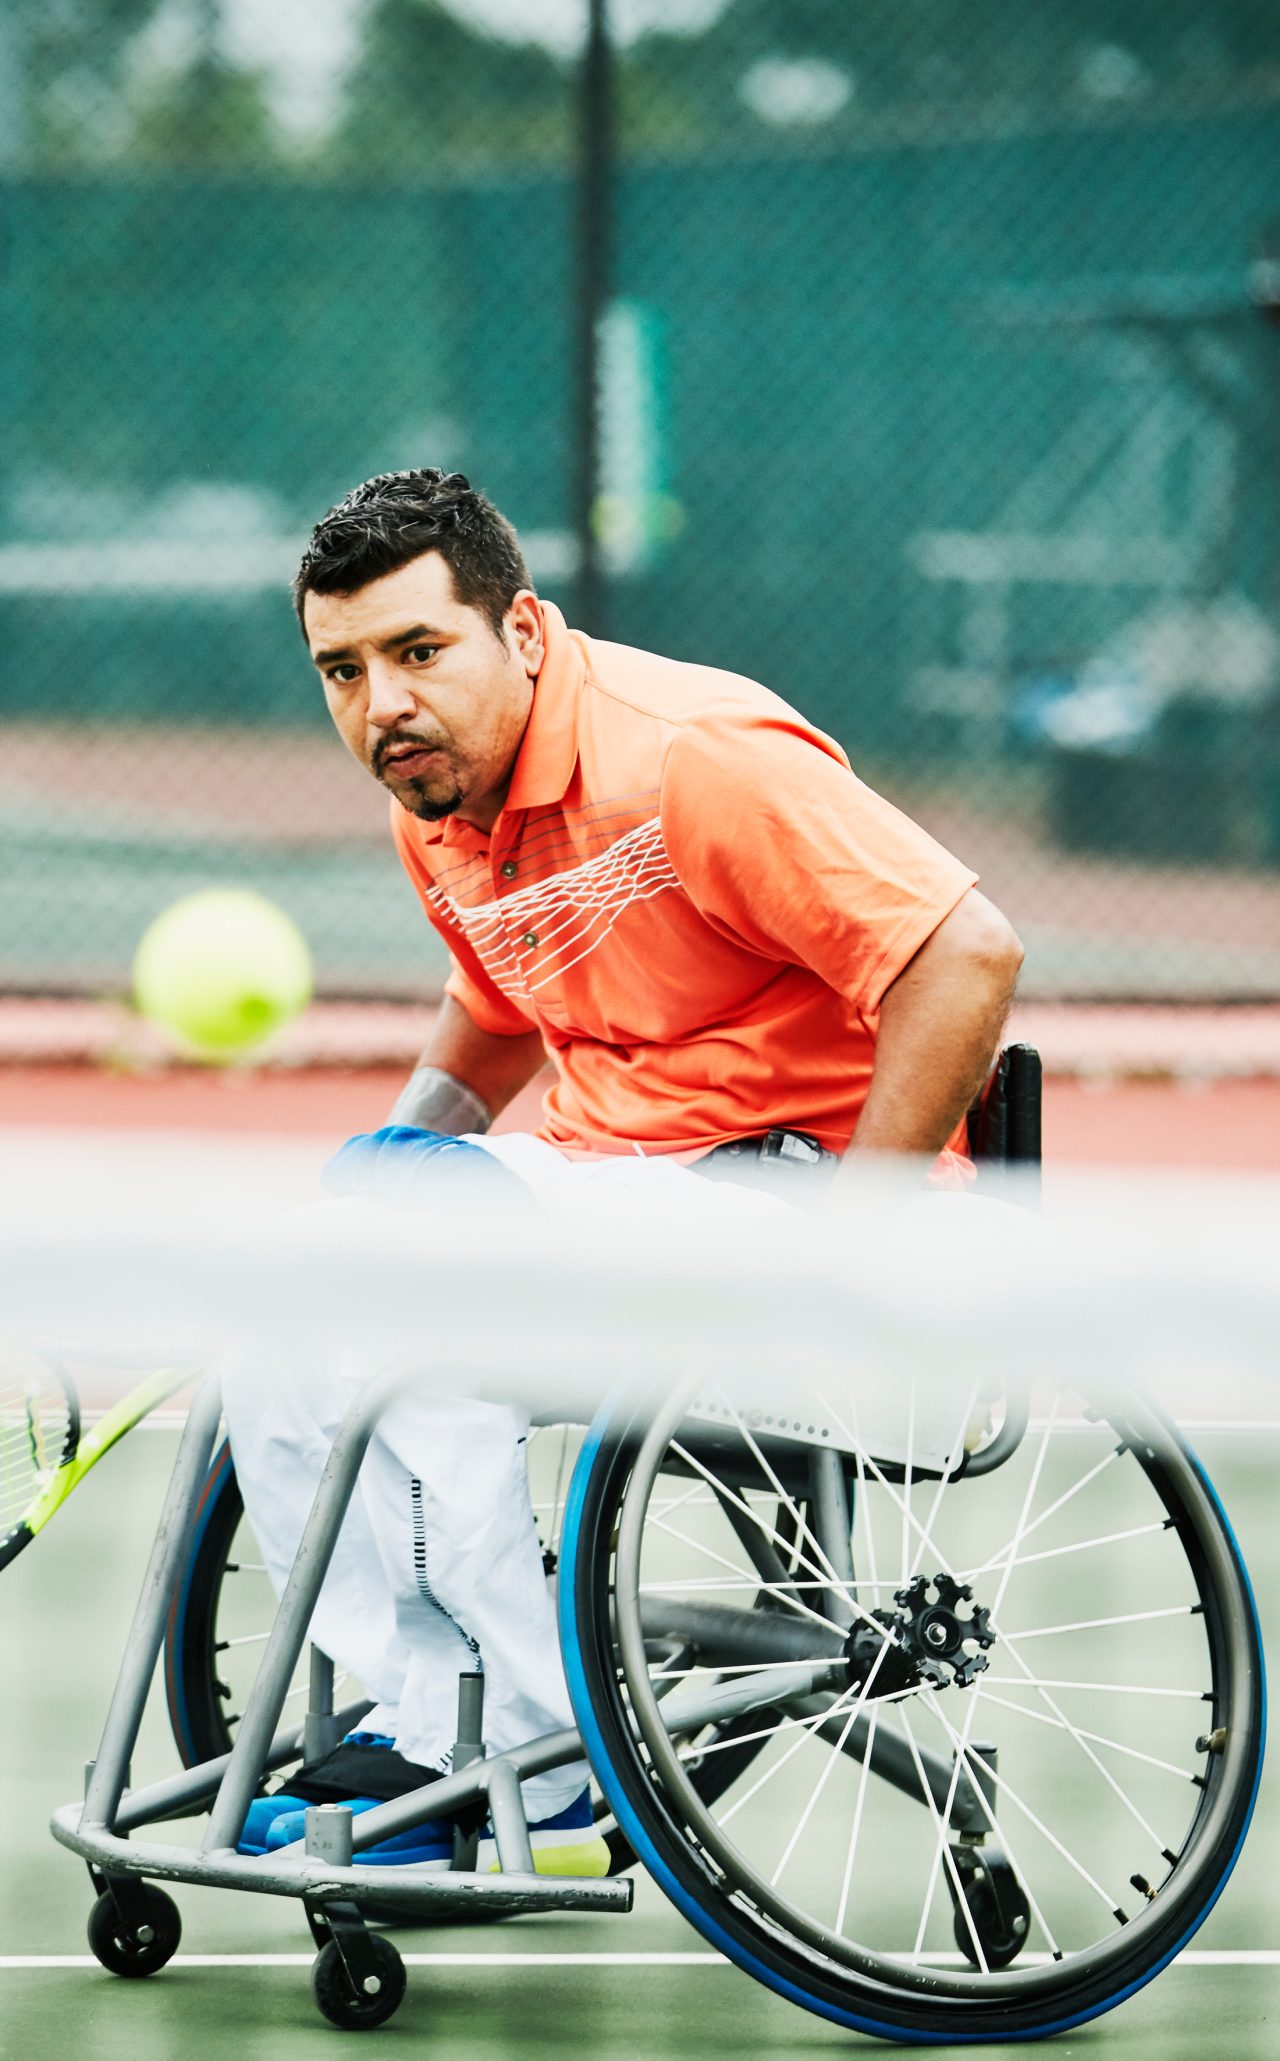 Adaptive athlete chasing down shot during wheelchair tennis match